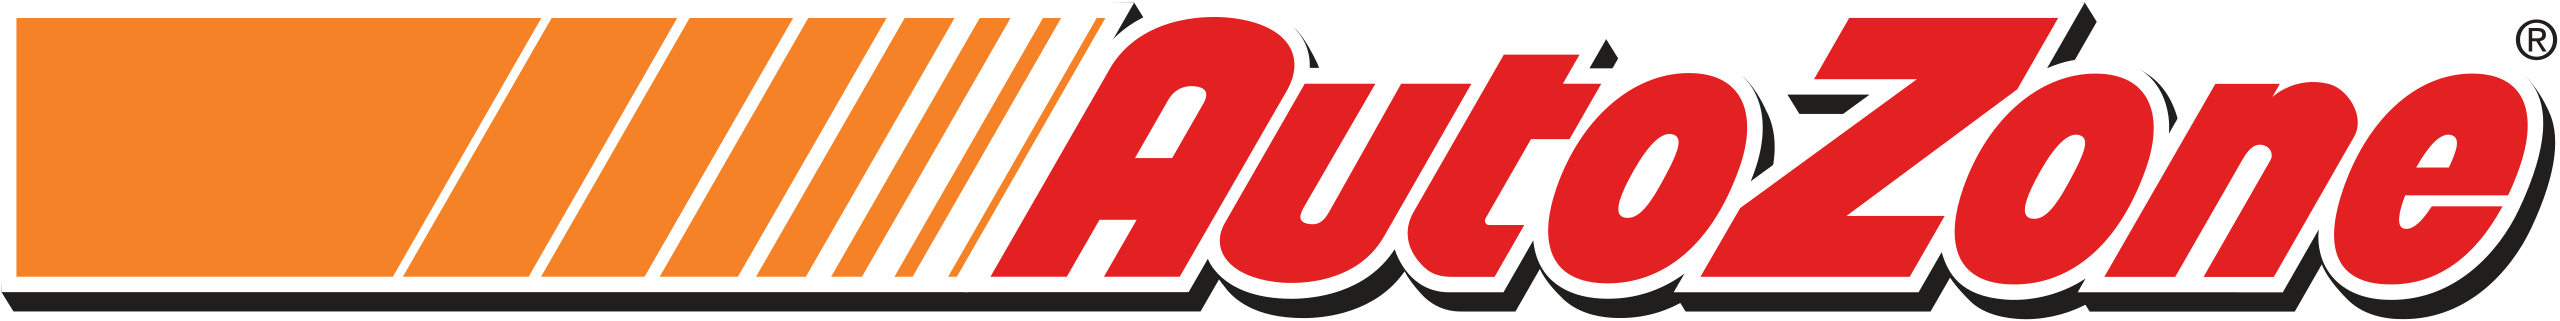 AutoZone_logo.svg